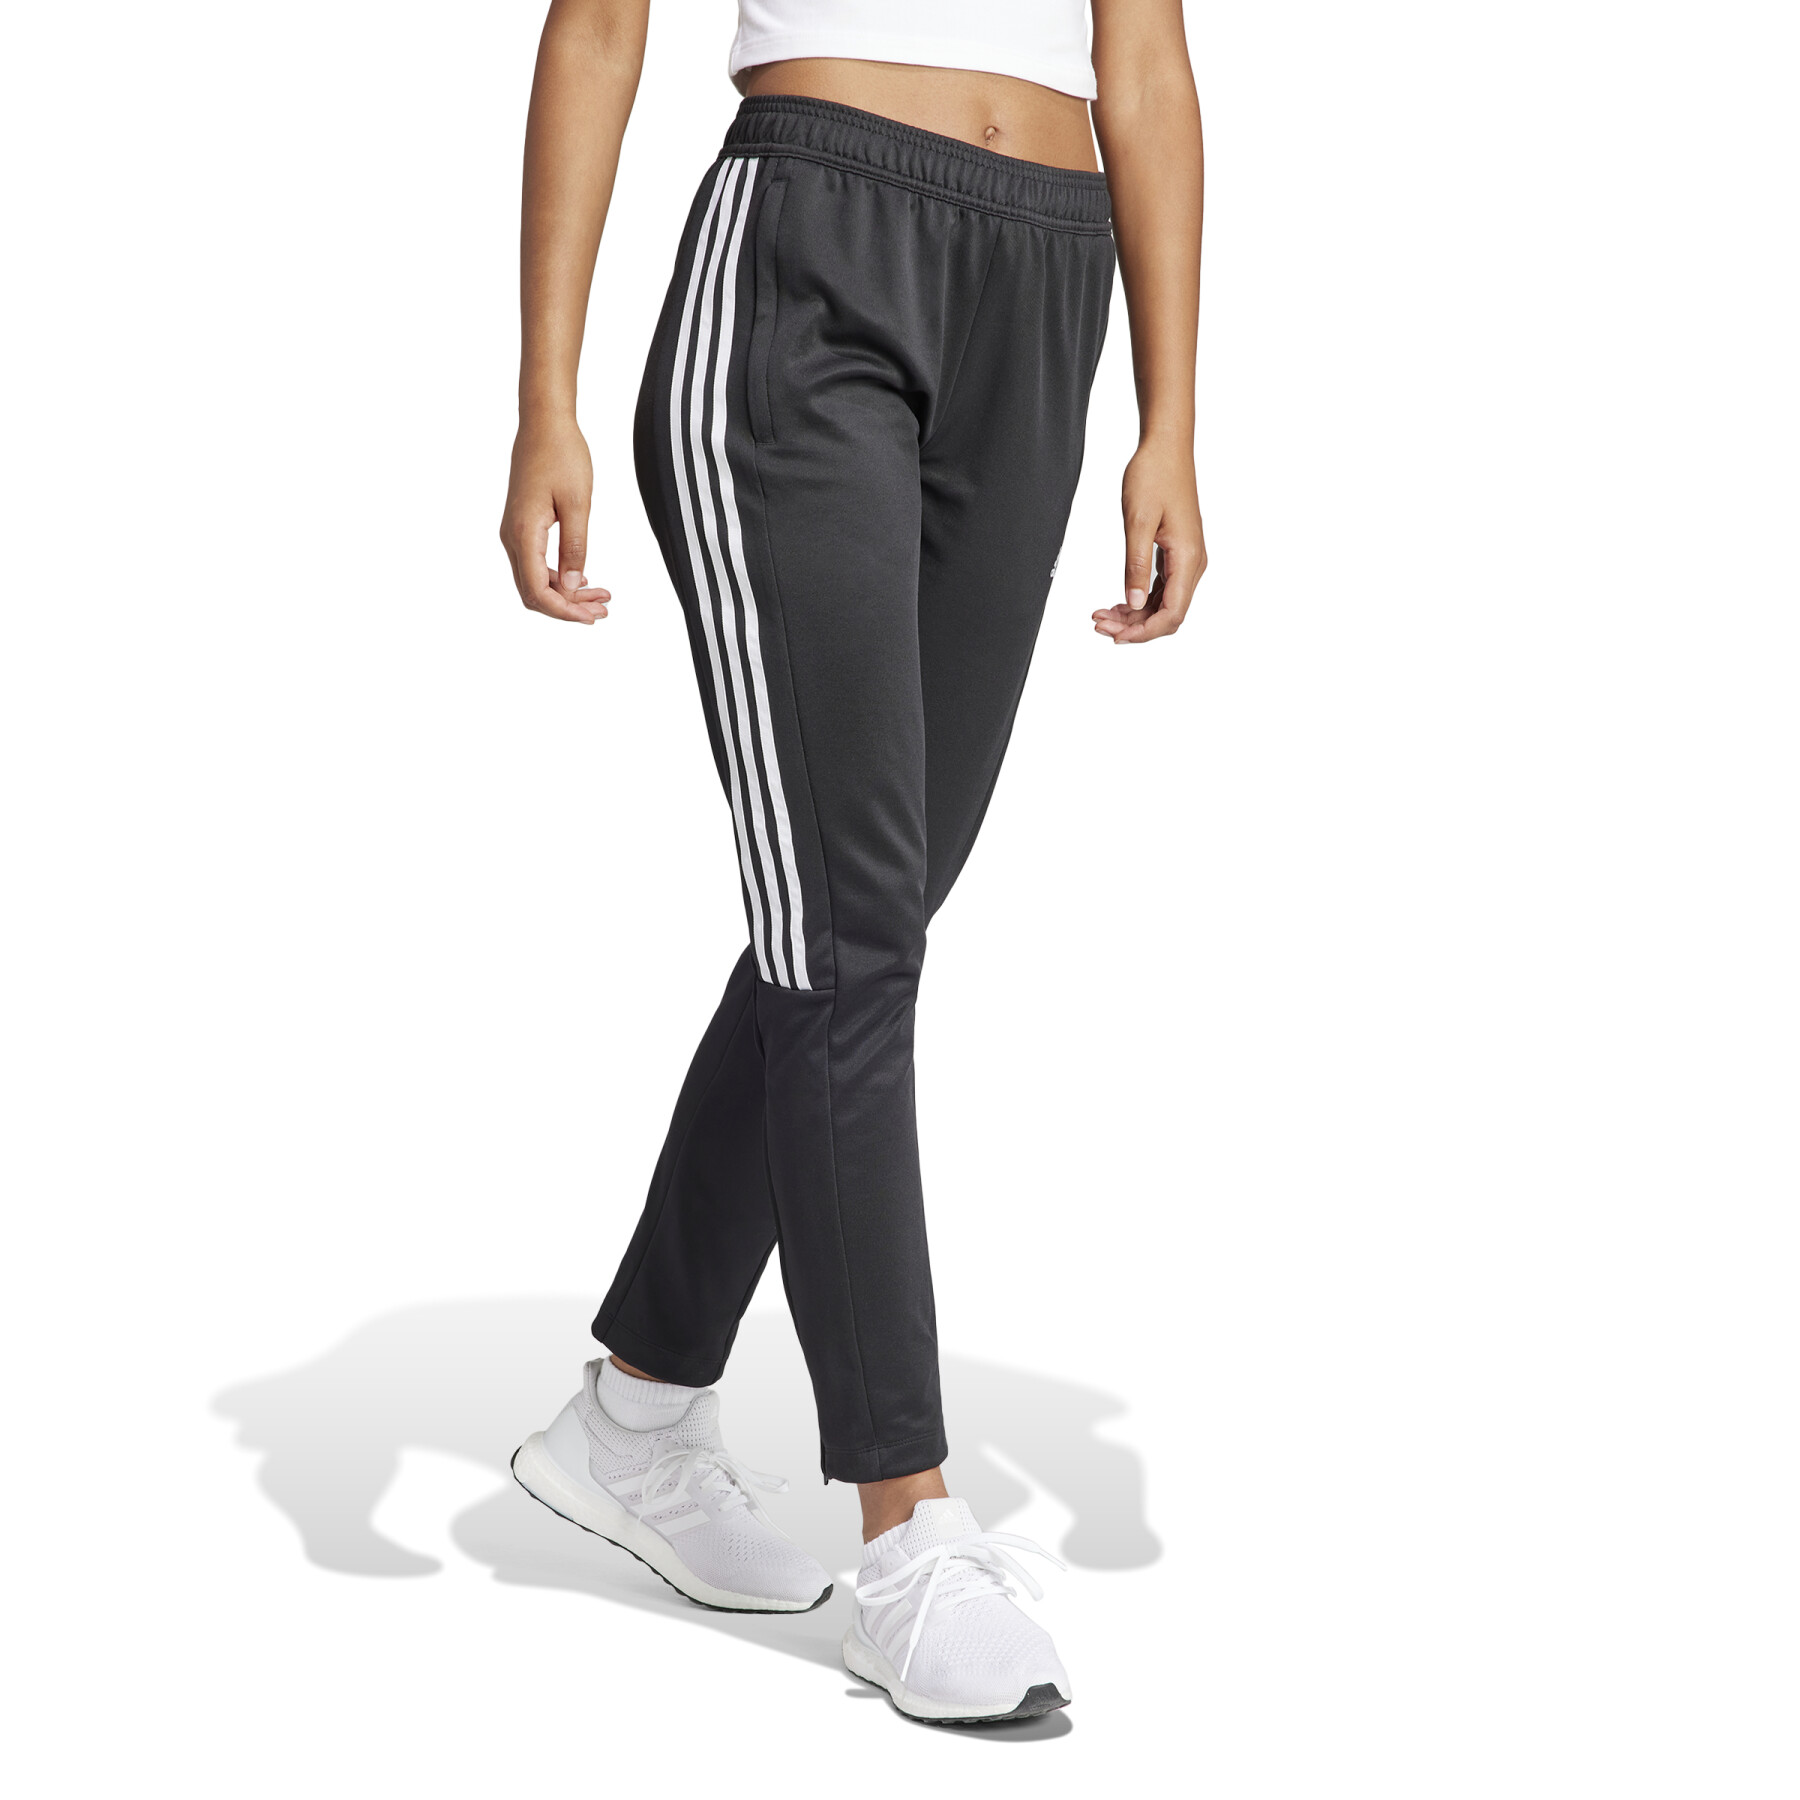 Women's jogging suit adidas Tiro